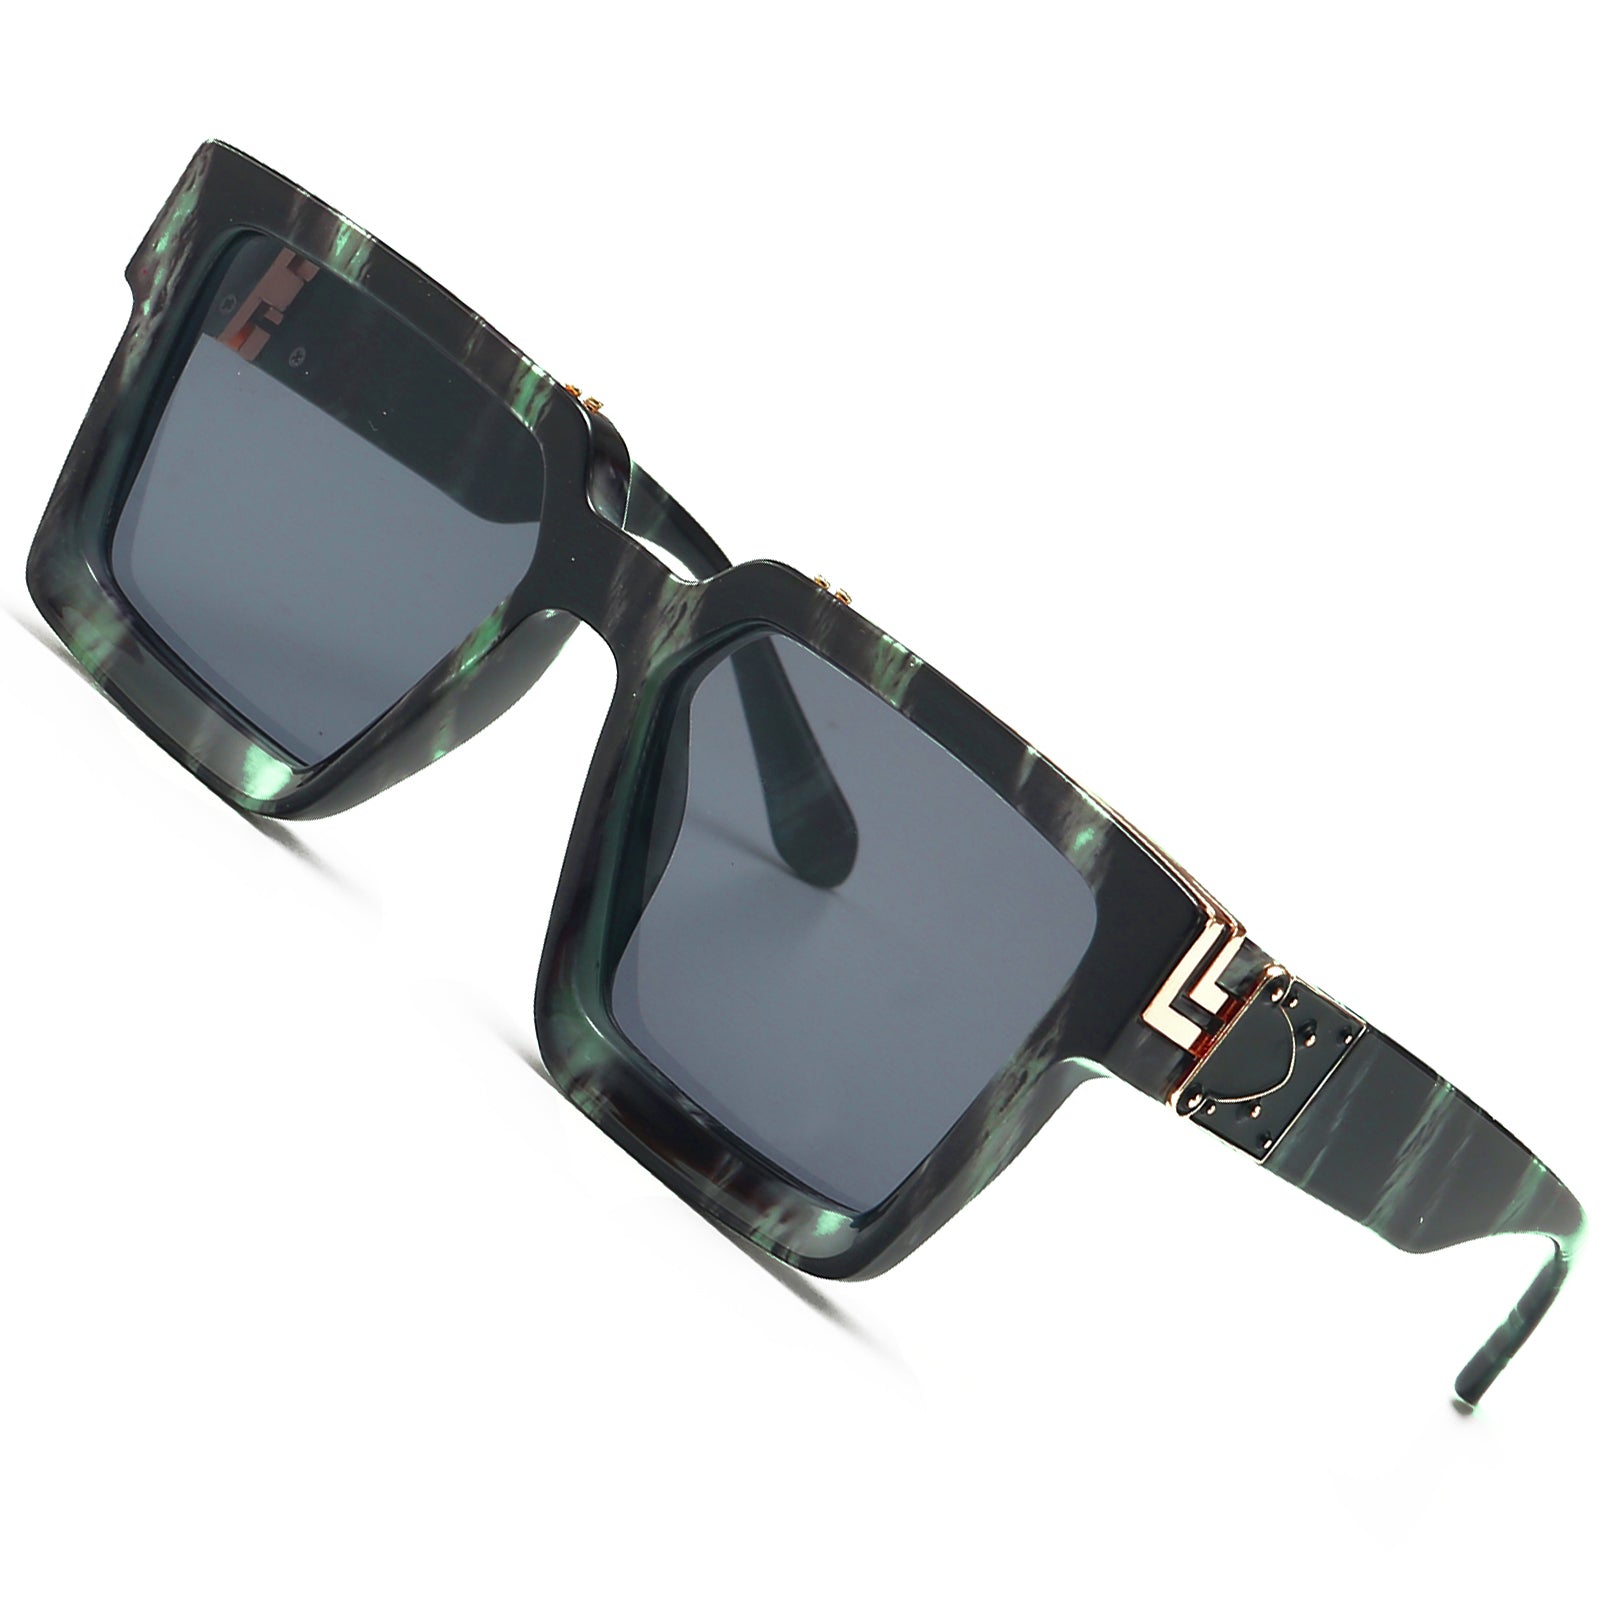 Retro Sunglasses Men Hip Hop Glasses Square Millionaire Diamond Sungla –  Cinily